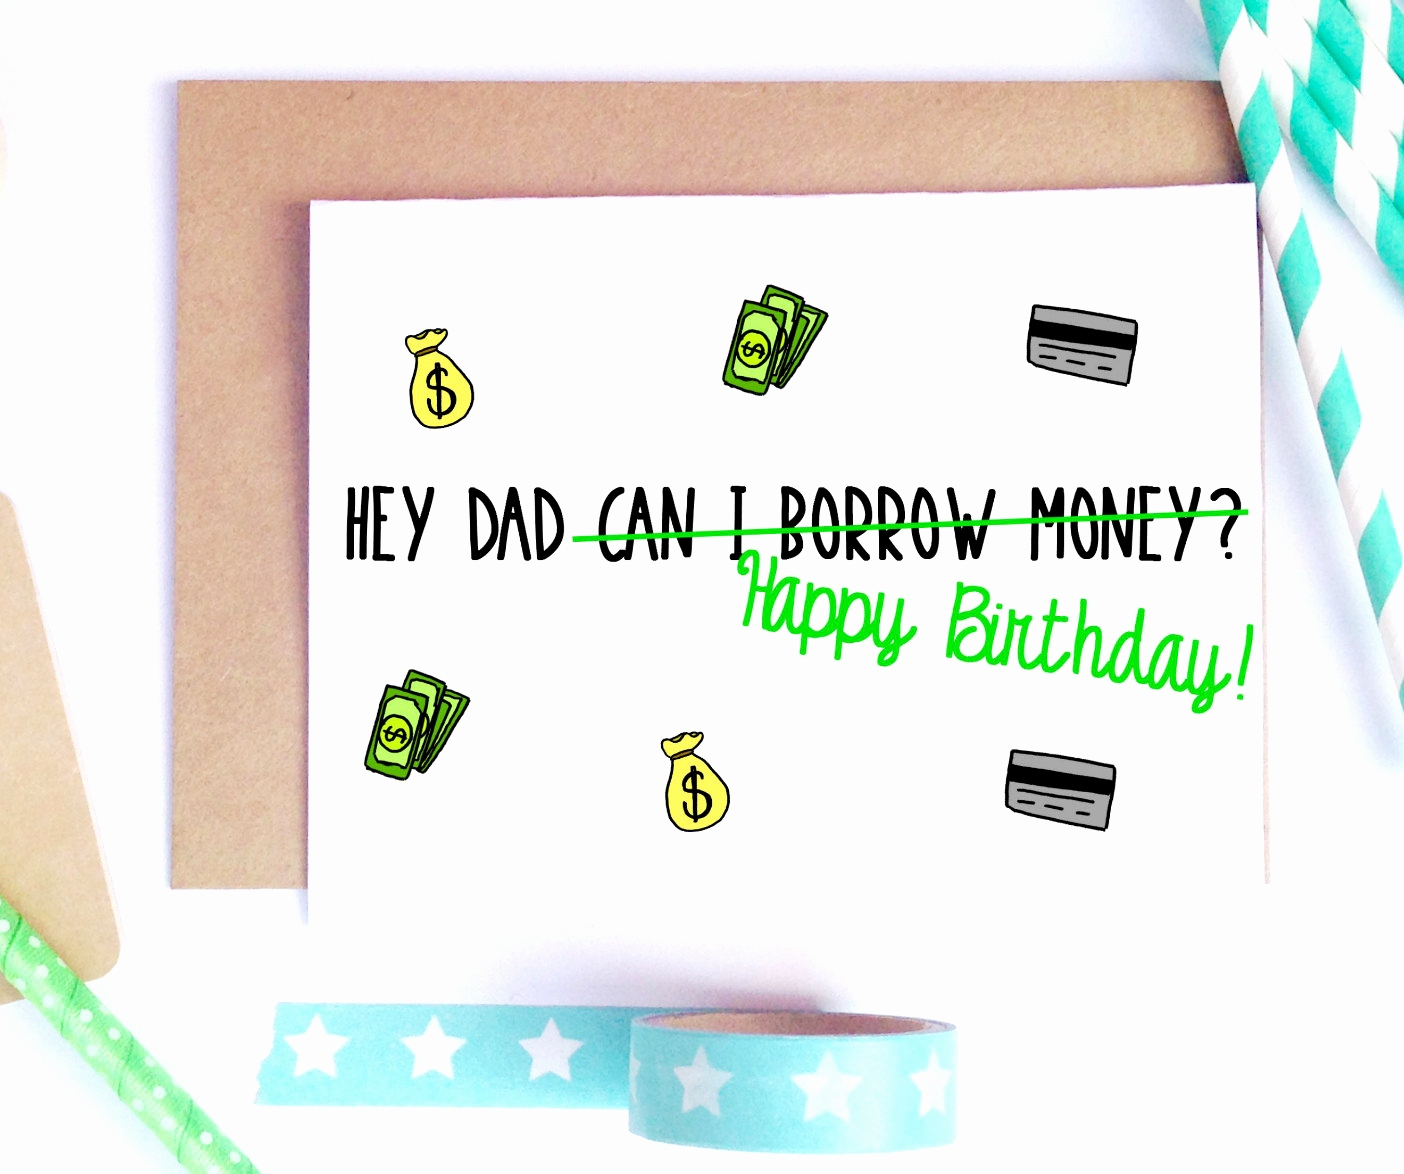 Birthday Cards For Dad Ideas Birthday Cards For Dad Ideas Elegant Homemade Birthday Cards For Dad